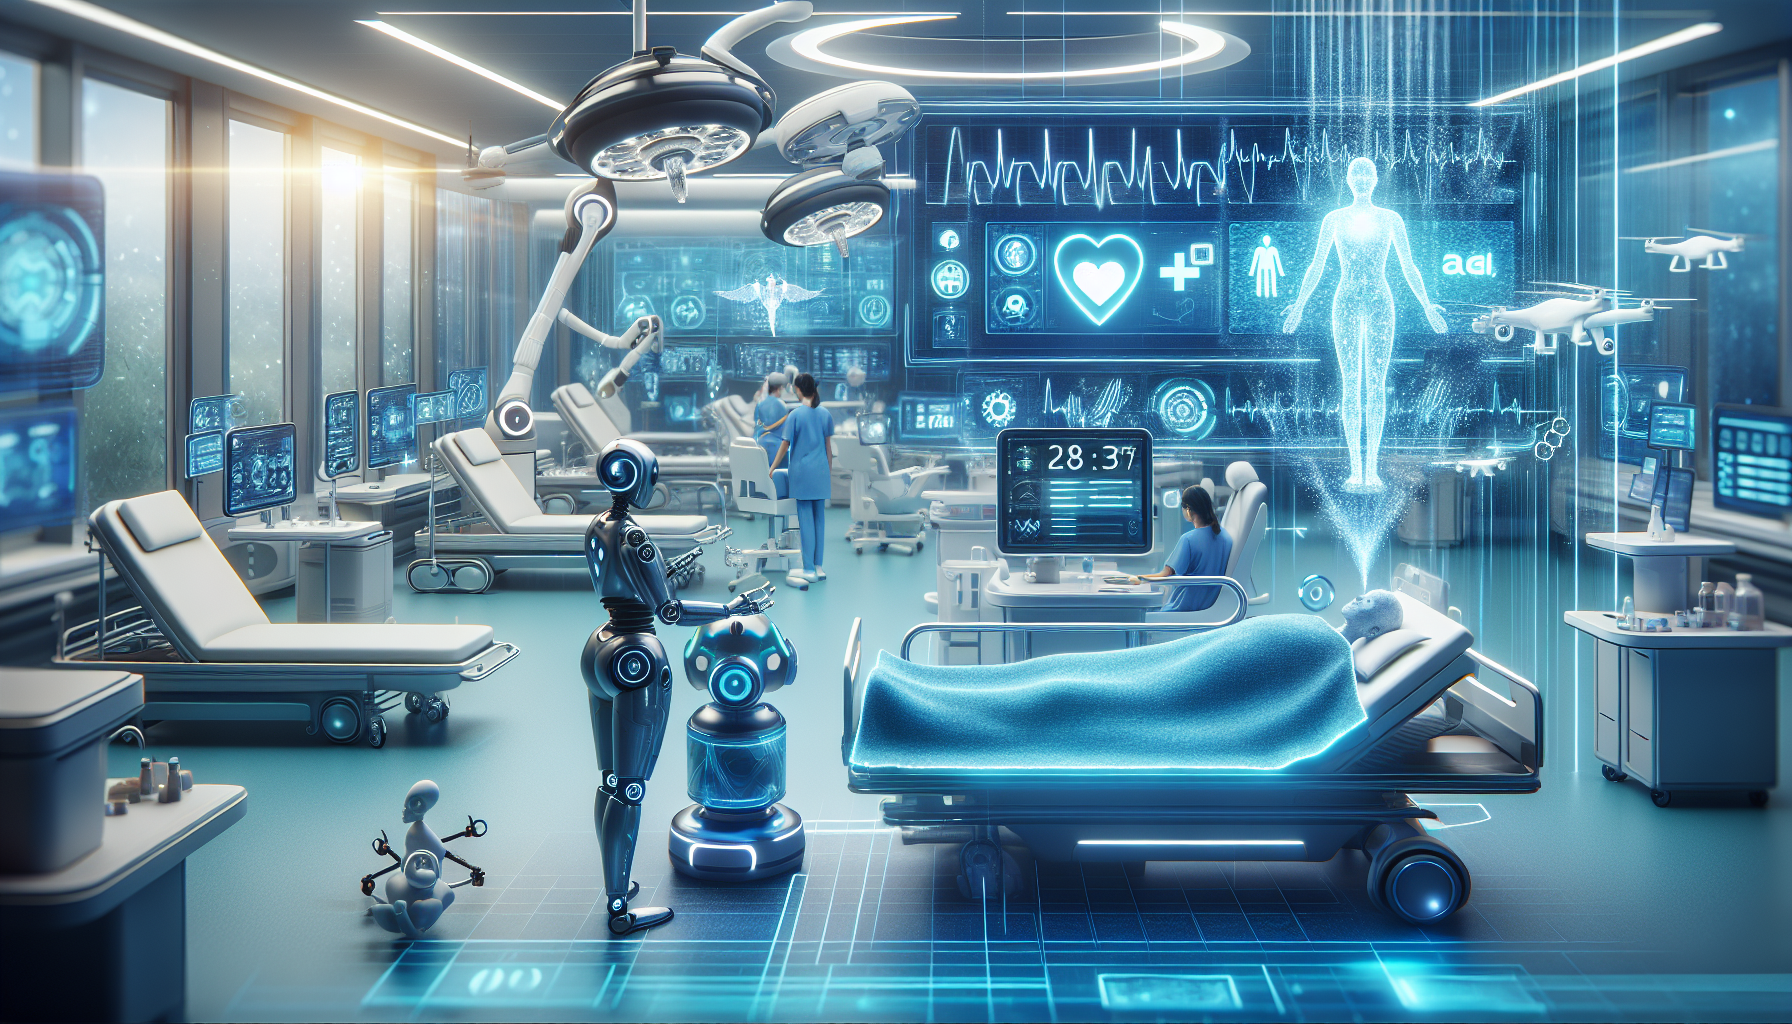 An illustration of a futuristic healthcare setting with AI technology